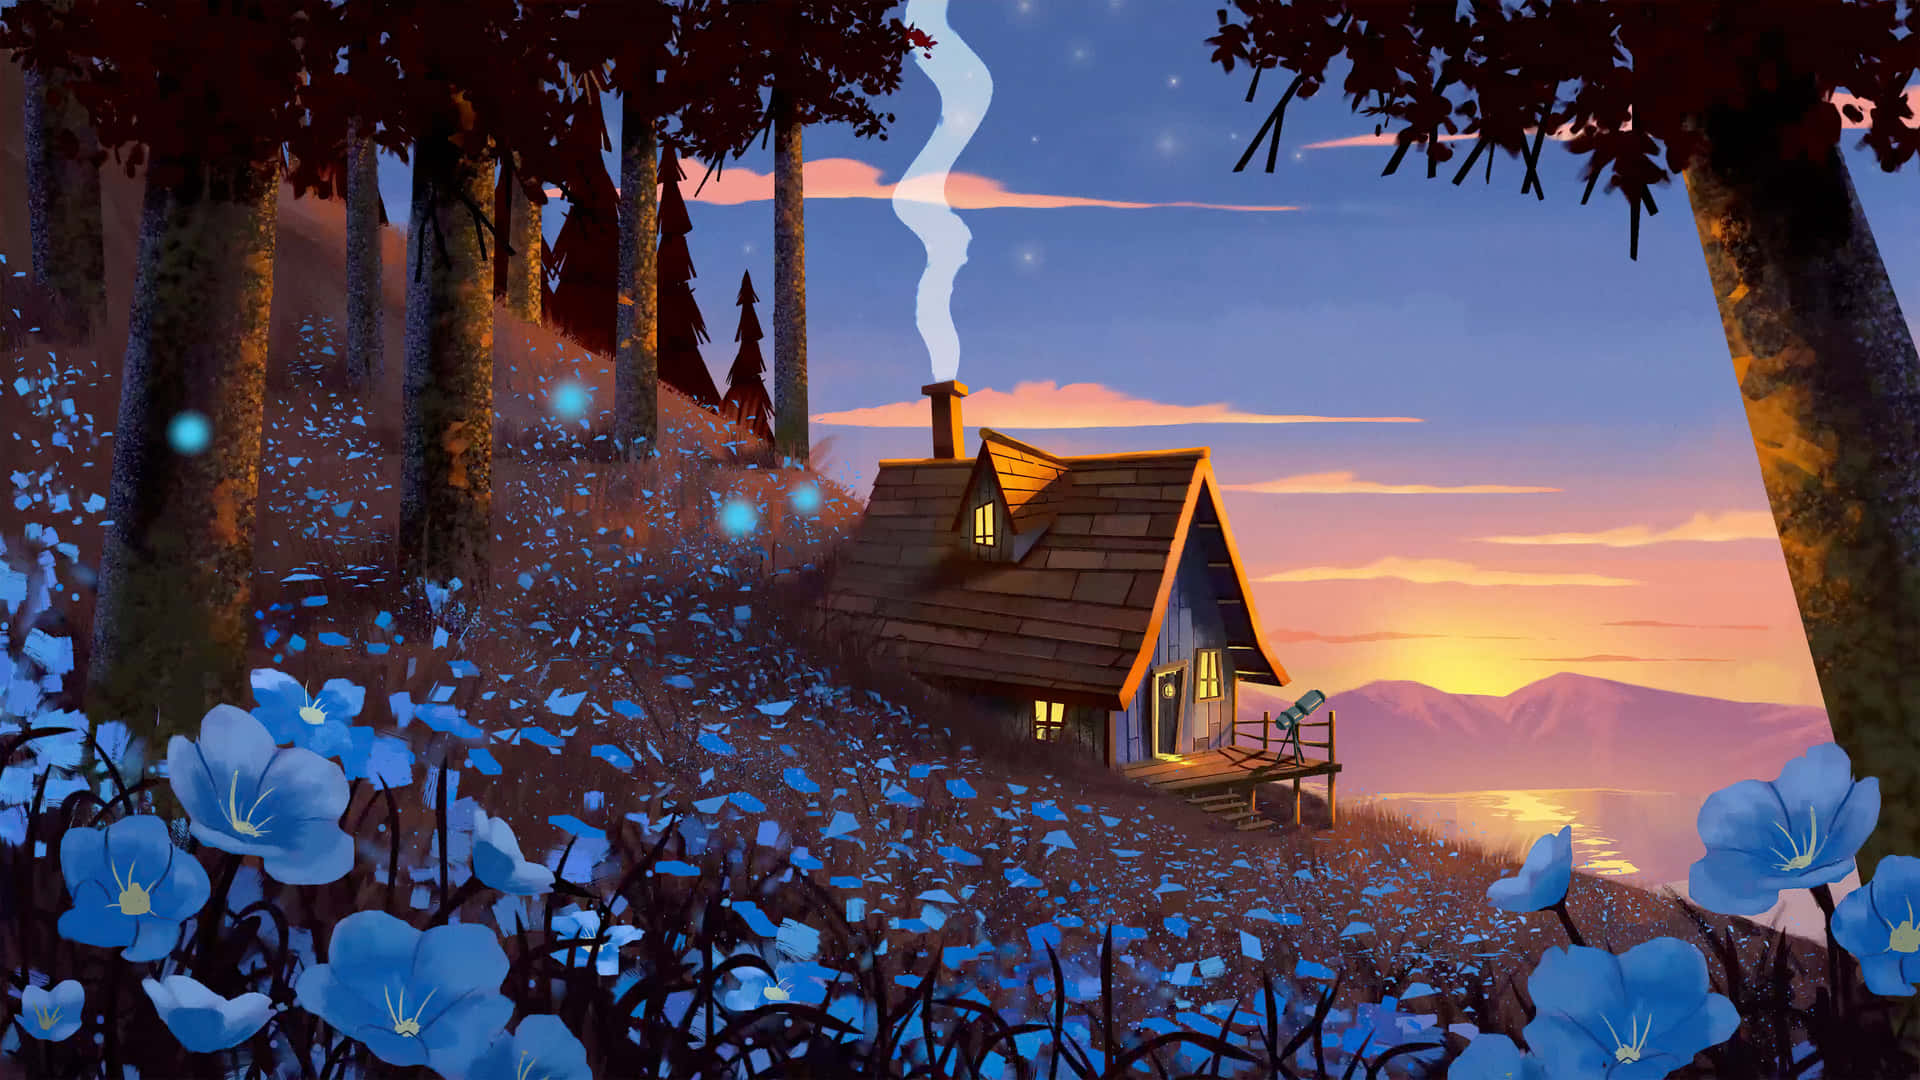 Enchanted Forest Cottageat Sunset Wallpaper